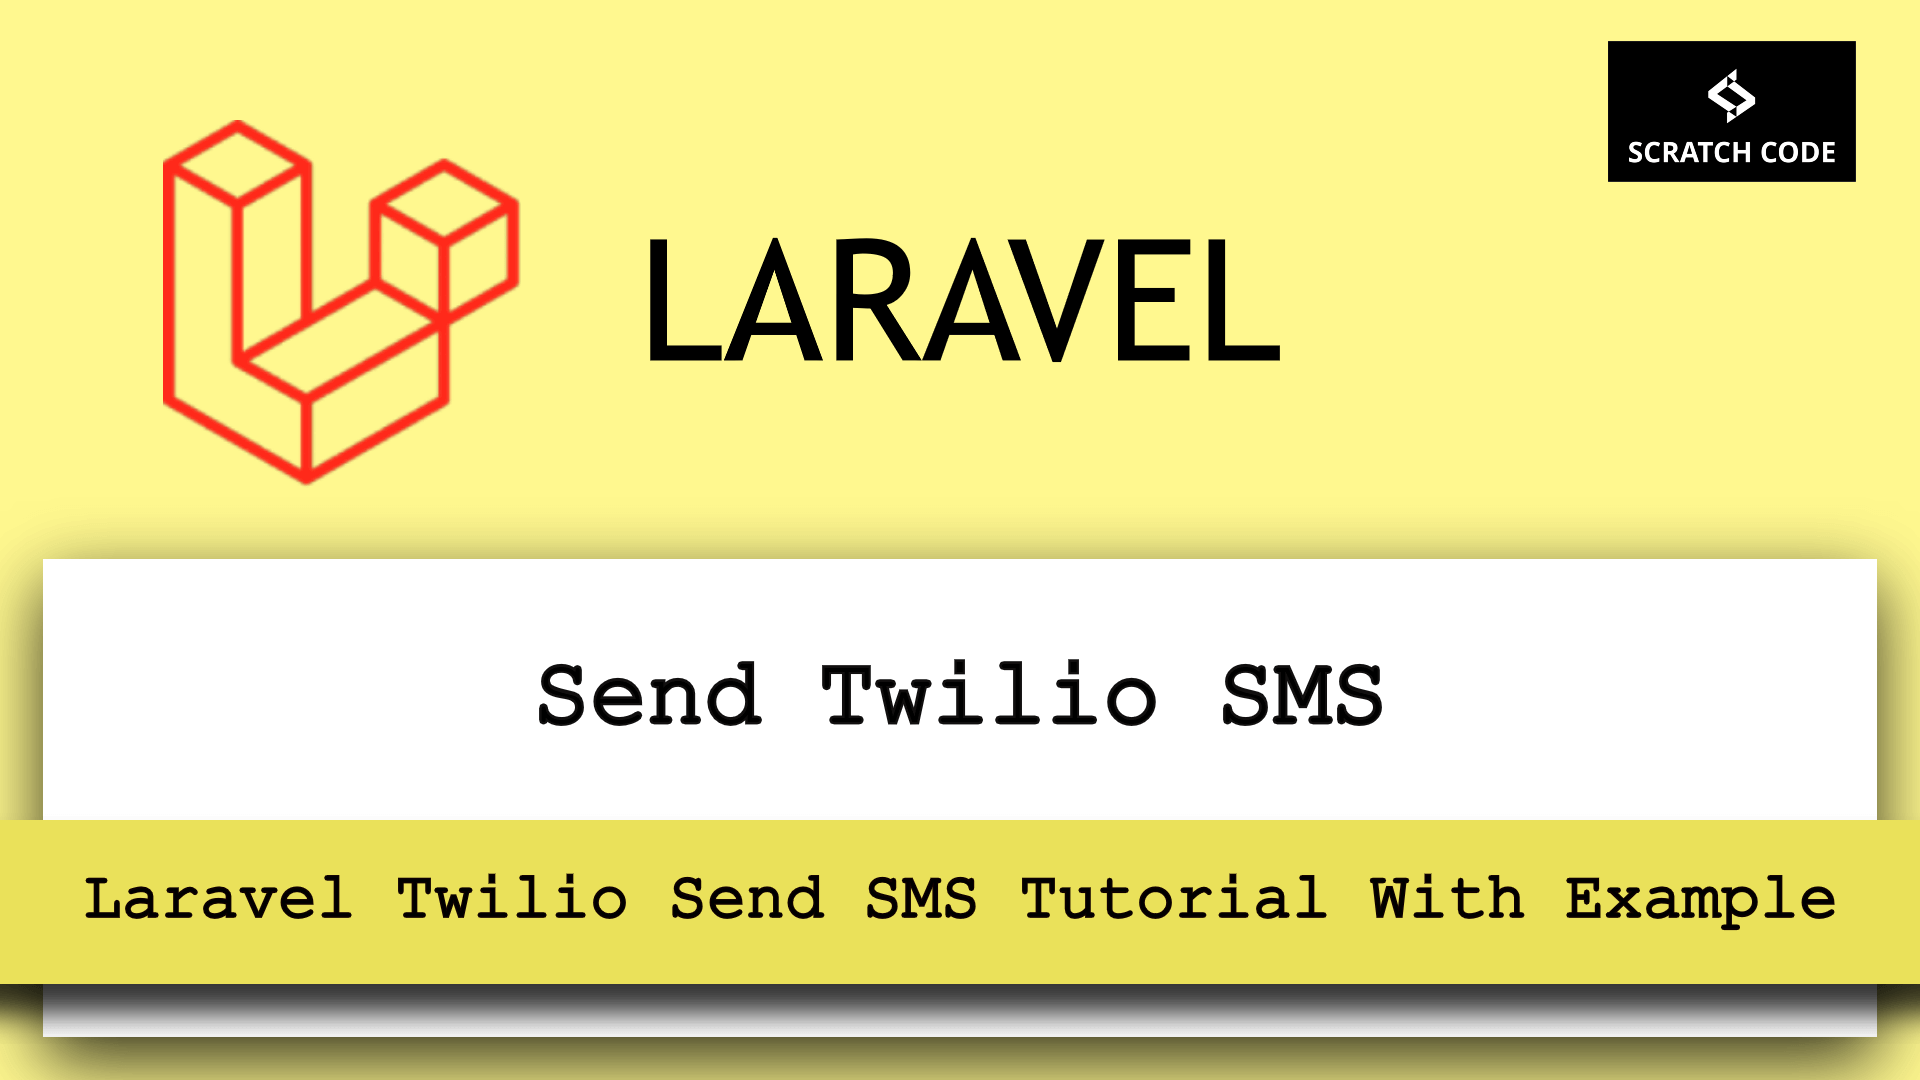 laravel twilio send sms tutorial with example